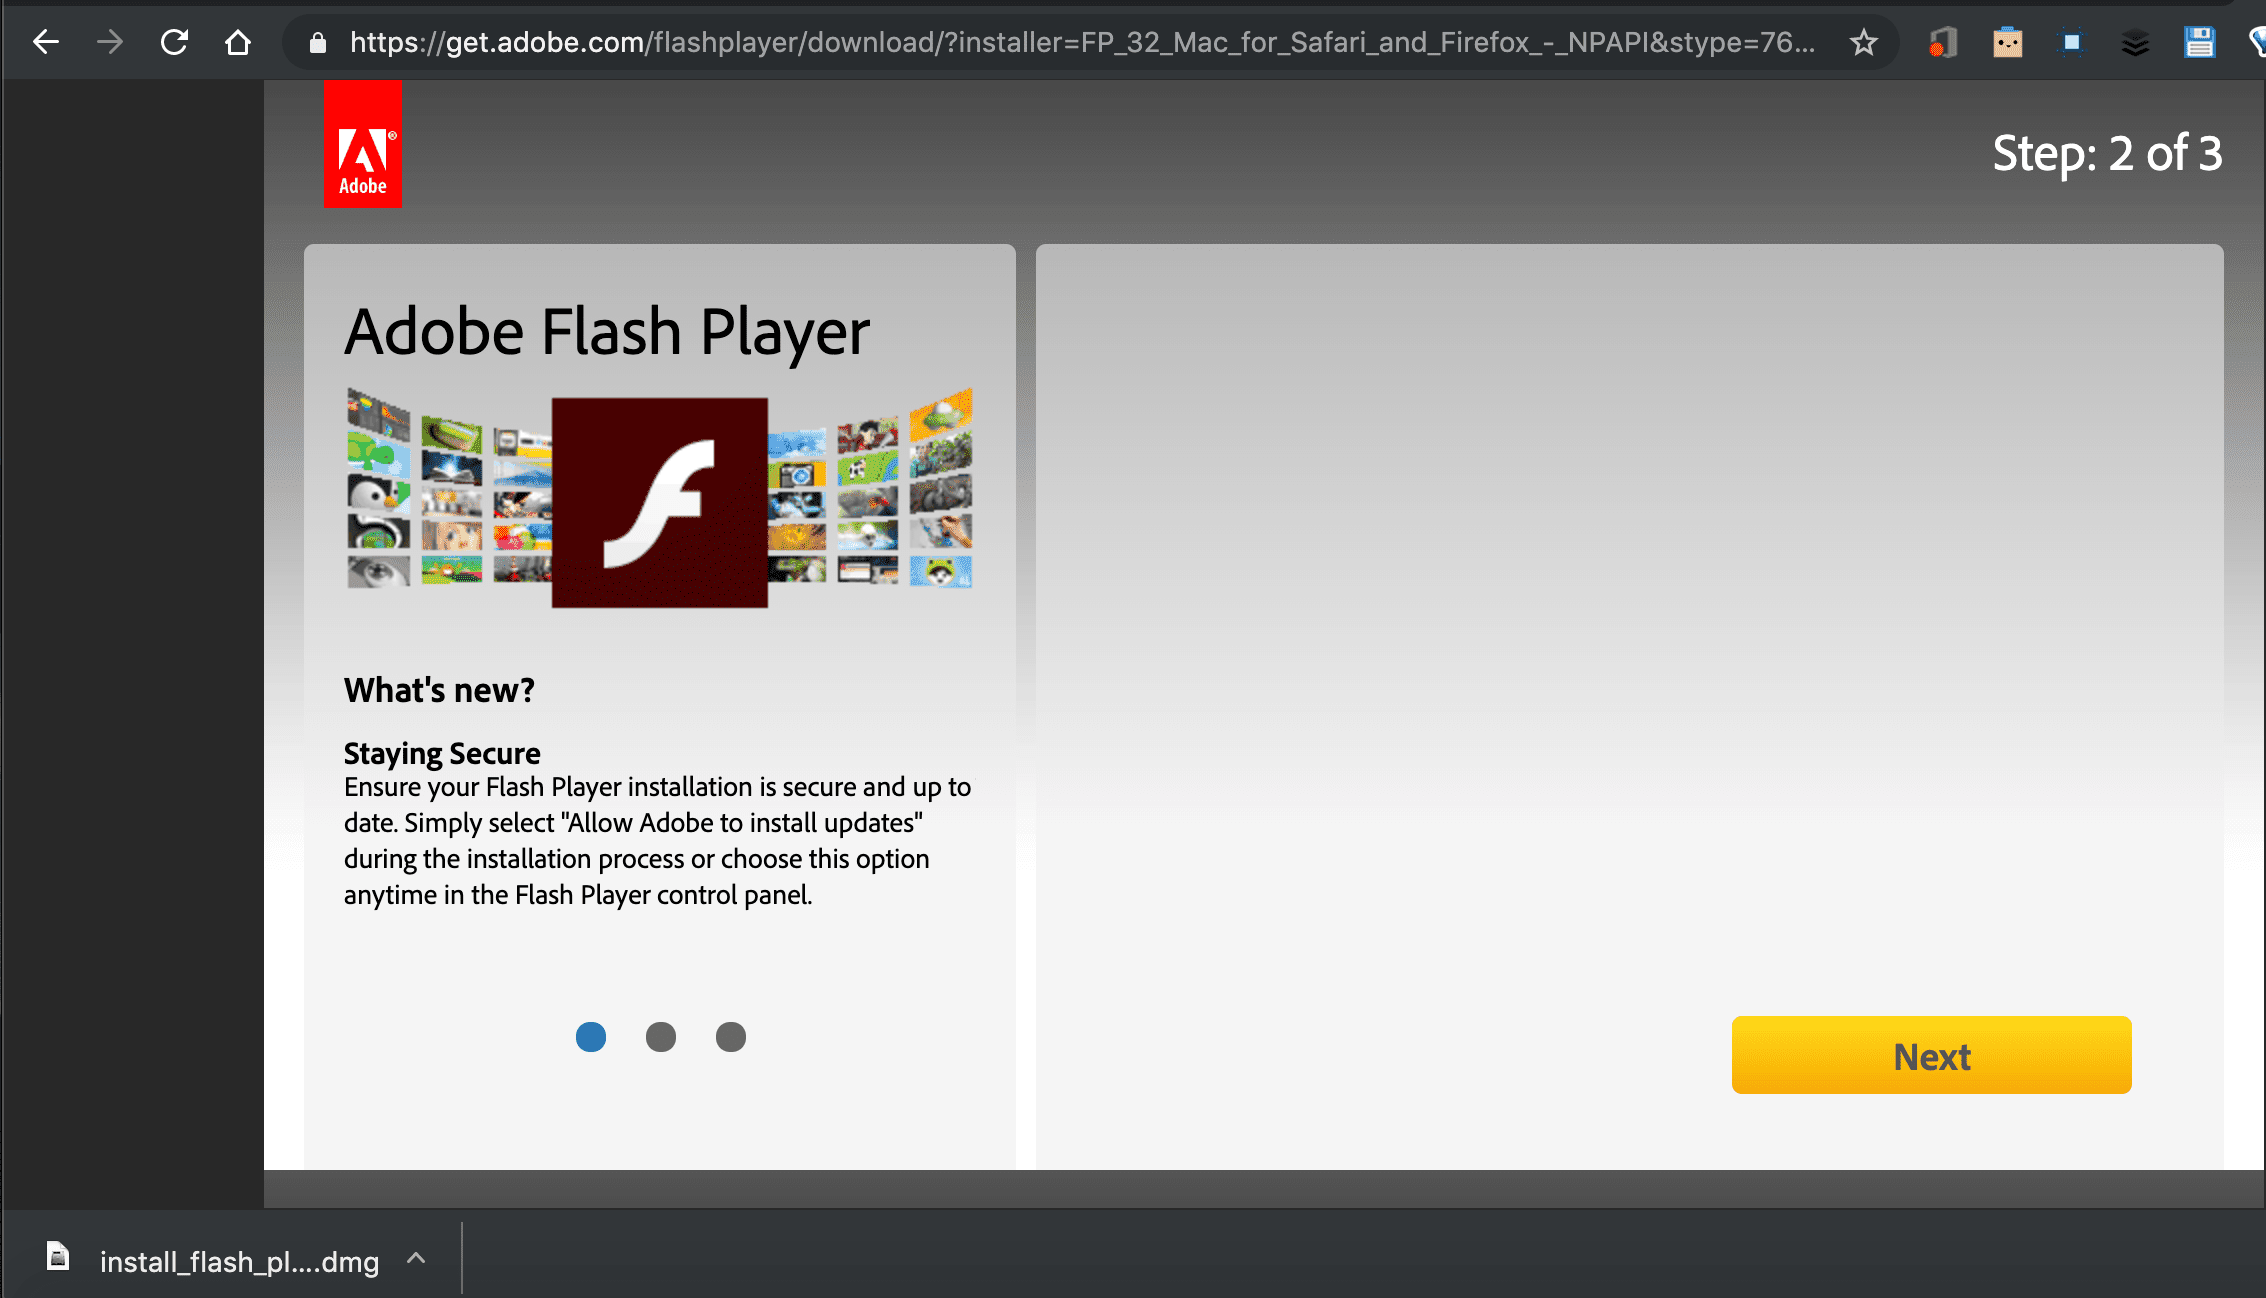 снимок экрана загрузки Adobe Flash Player